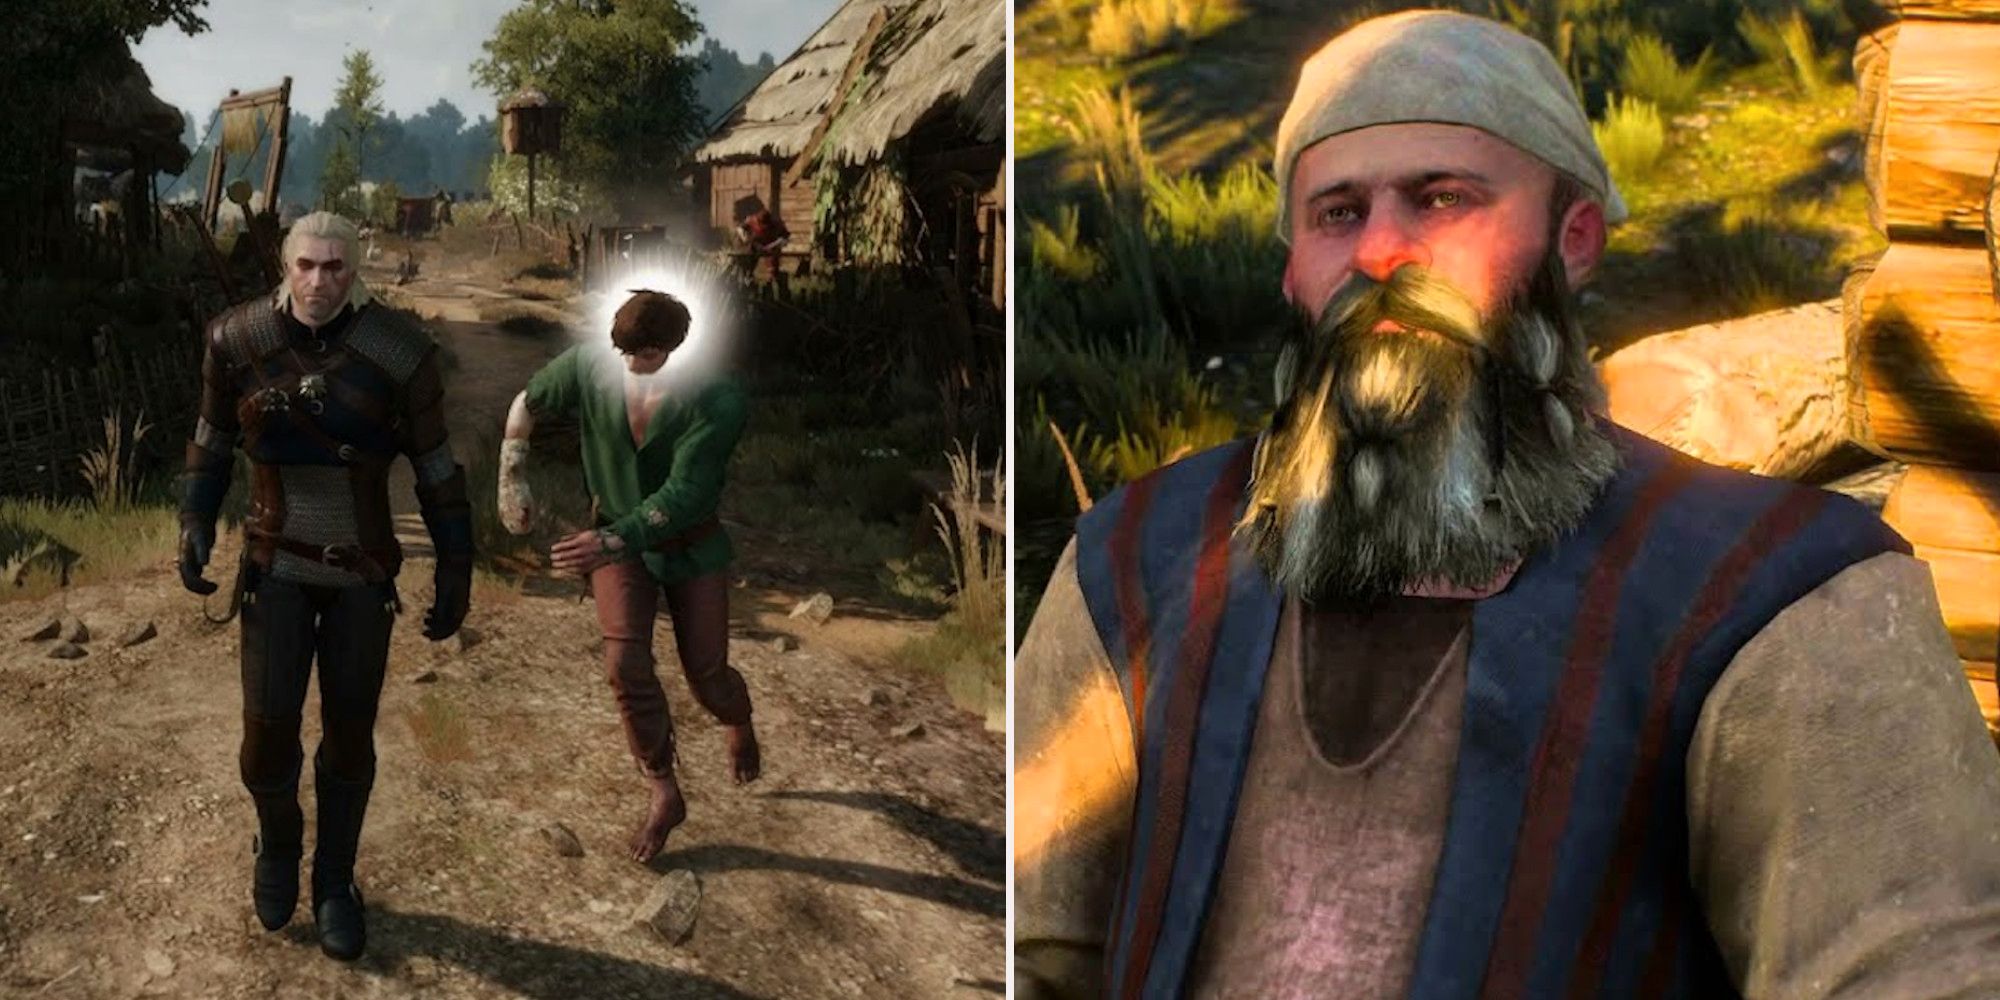 Twisted Firestarter Geralt Napp Wilis Dwarf blacksmith quest location walkthrough guide The Witcher 3